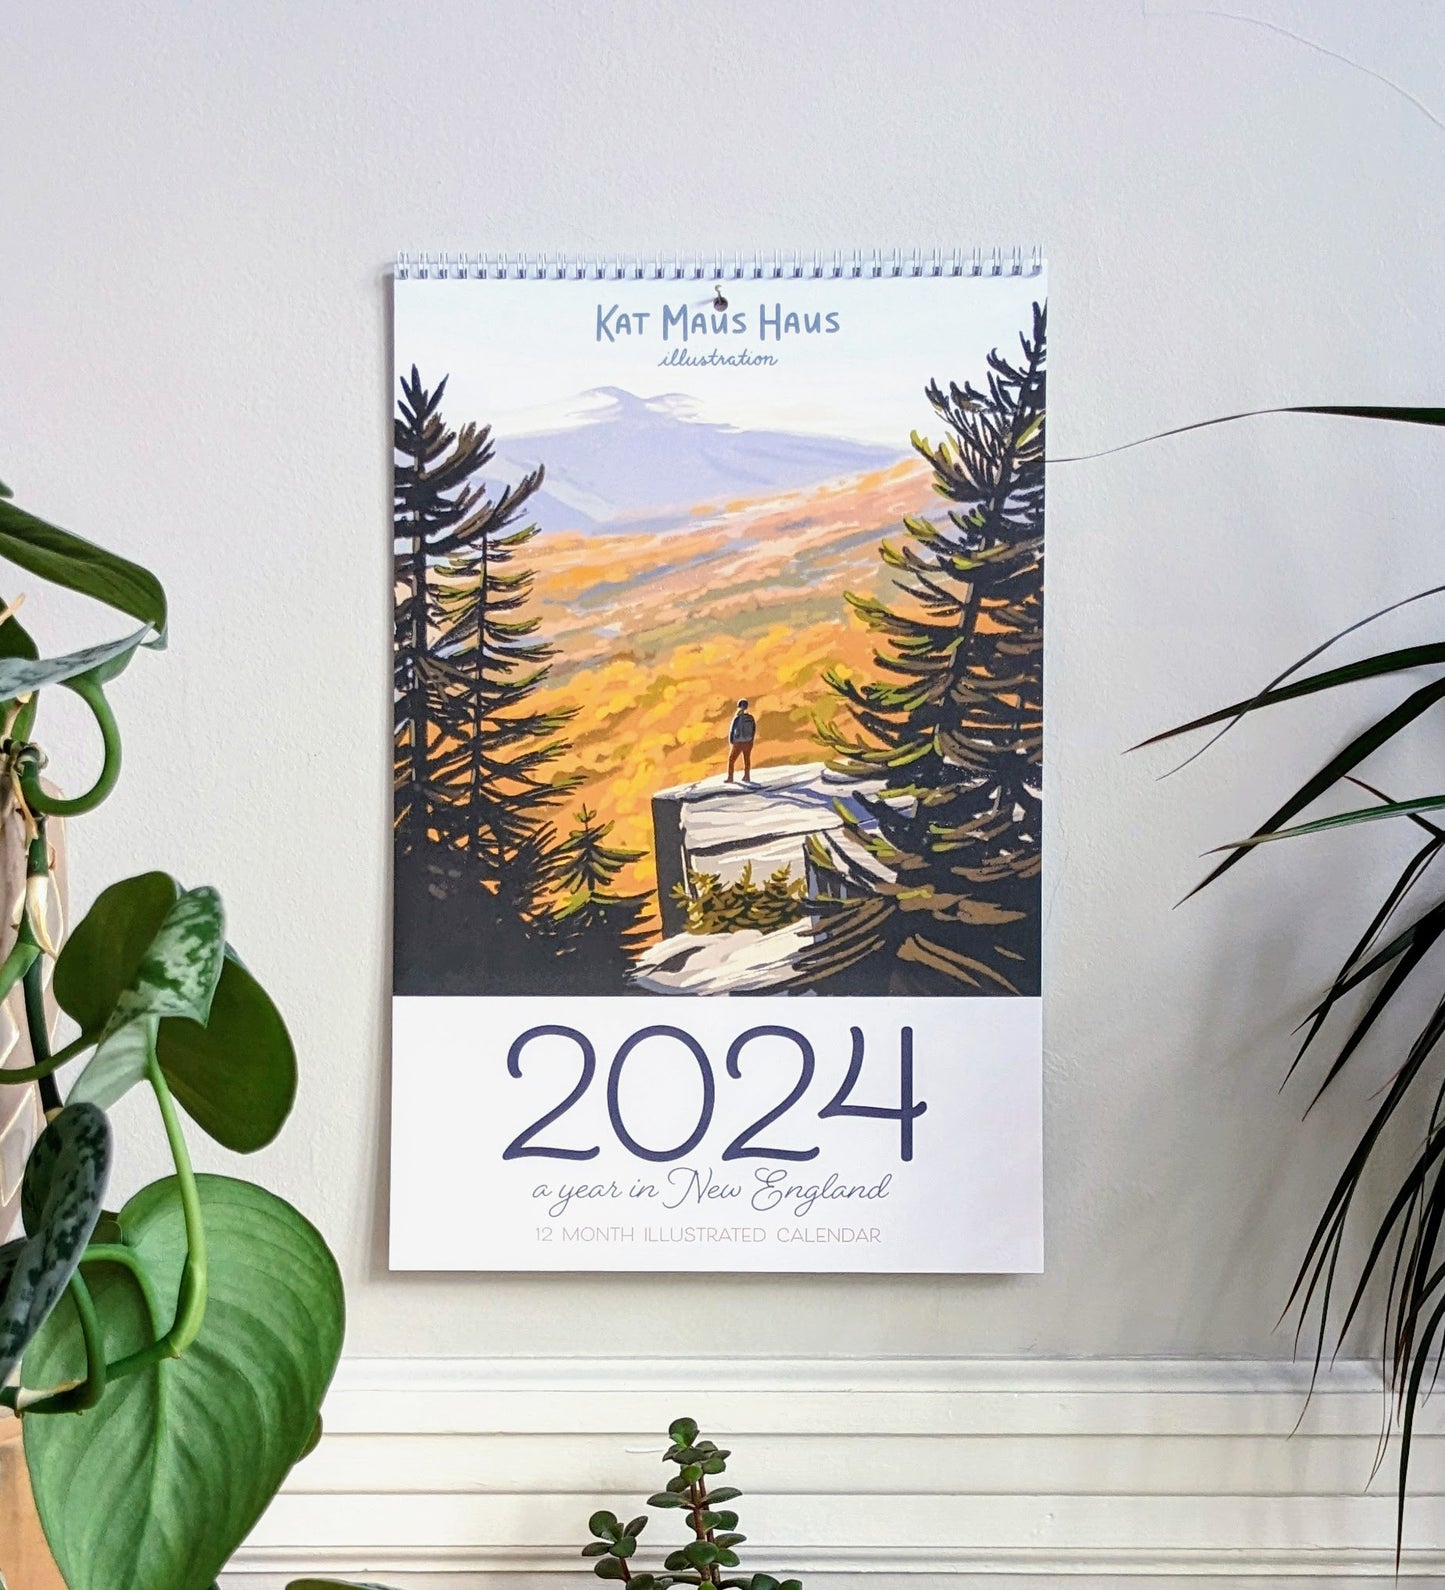 2024 Wall Calendar, "A Year in New England"